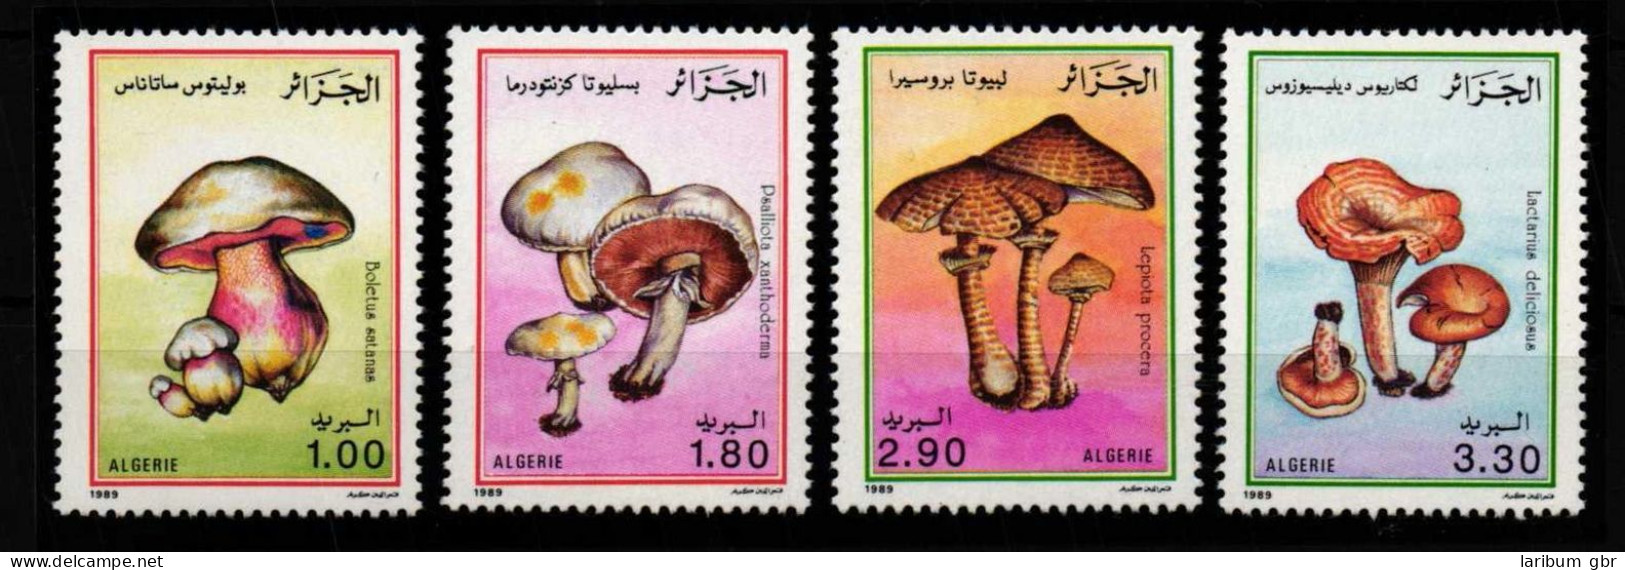 Algerien 1010-1013 Postfrisch Pilze #HQ334 - Algeria (1962-...)